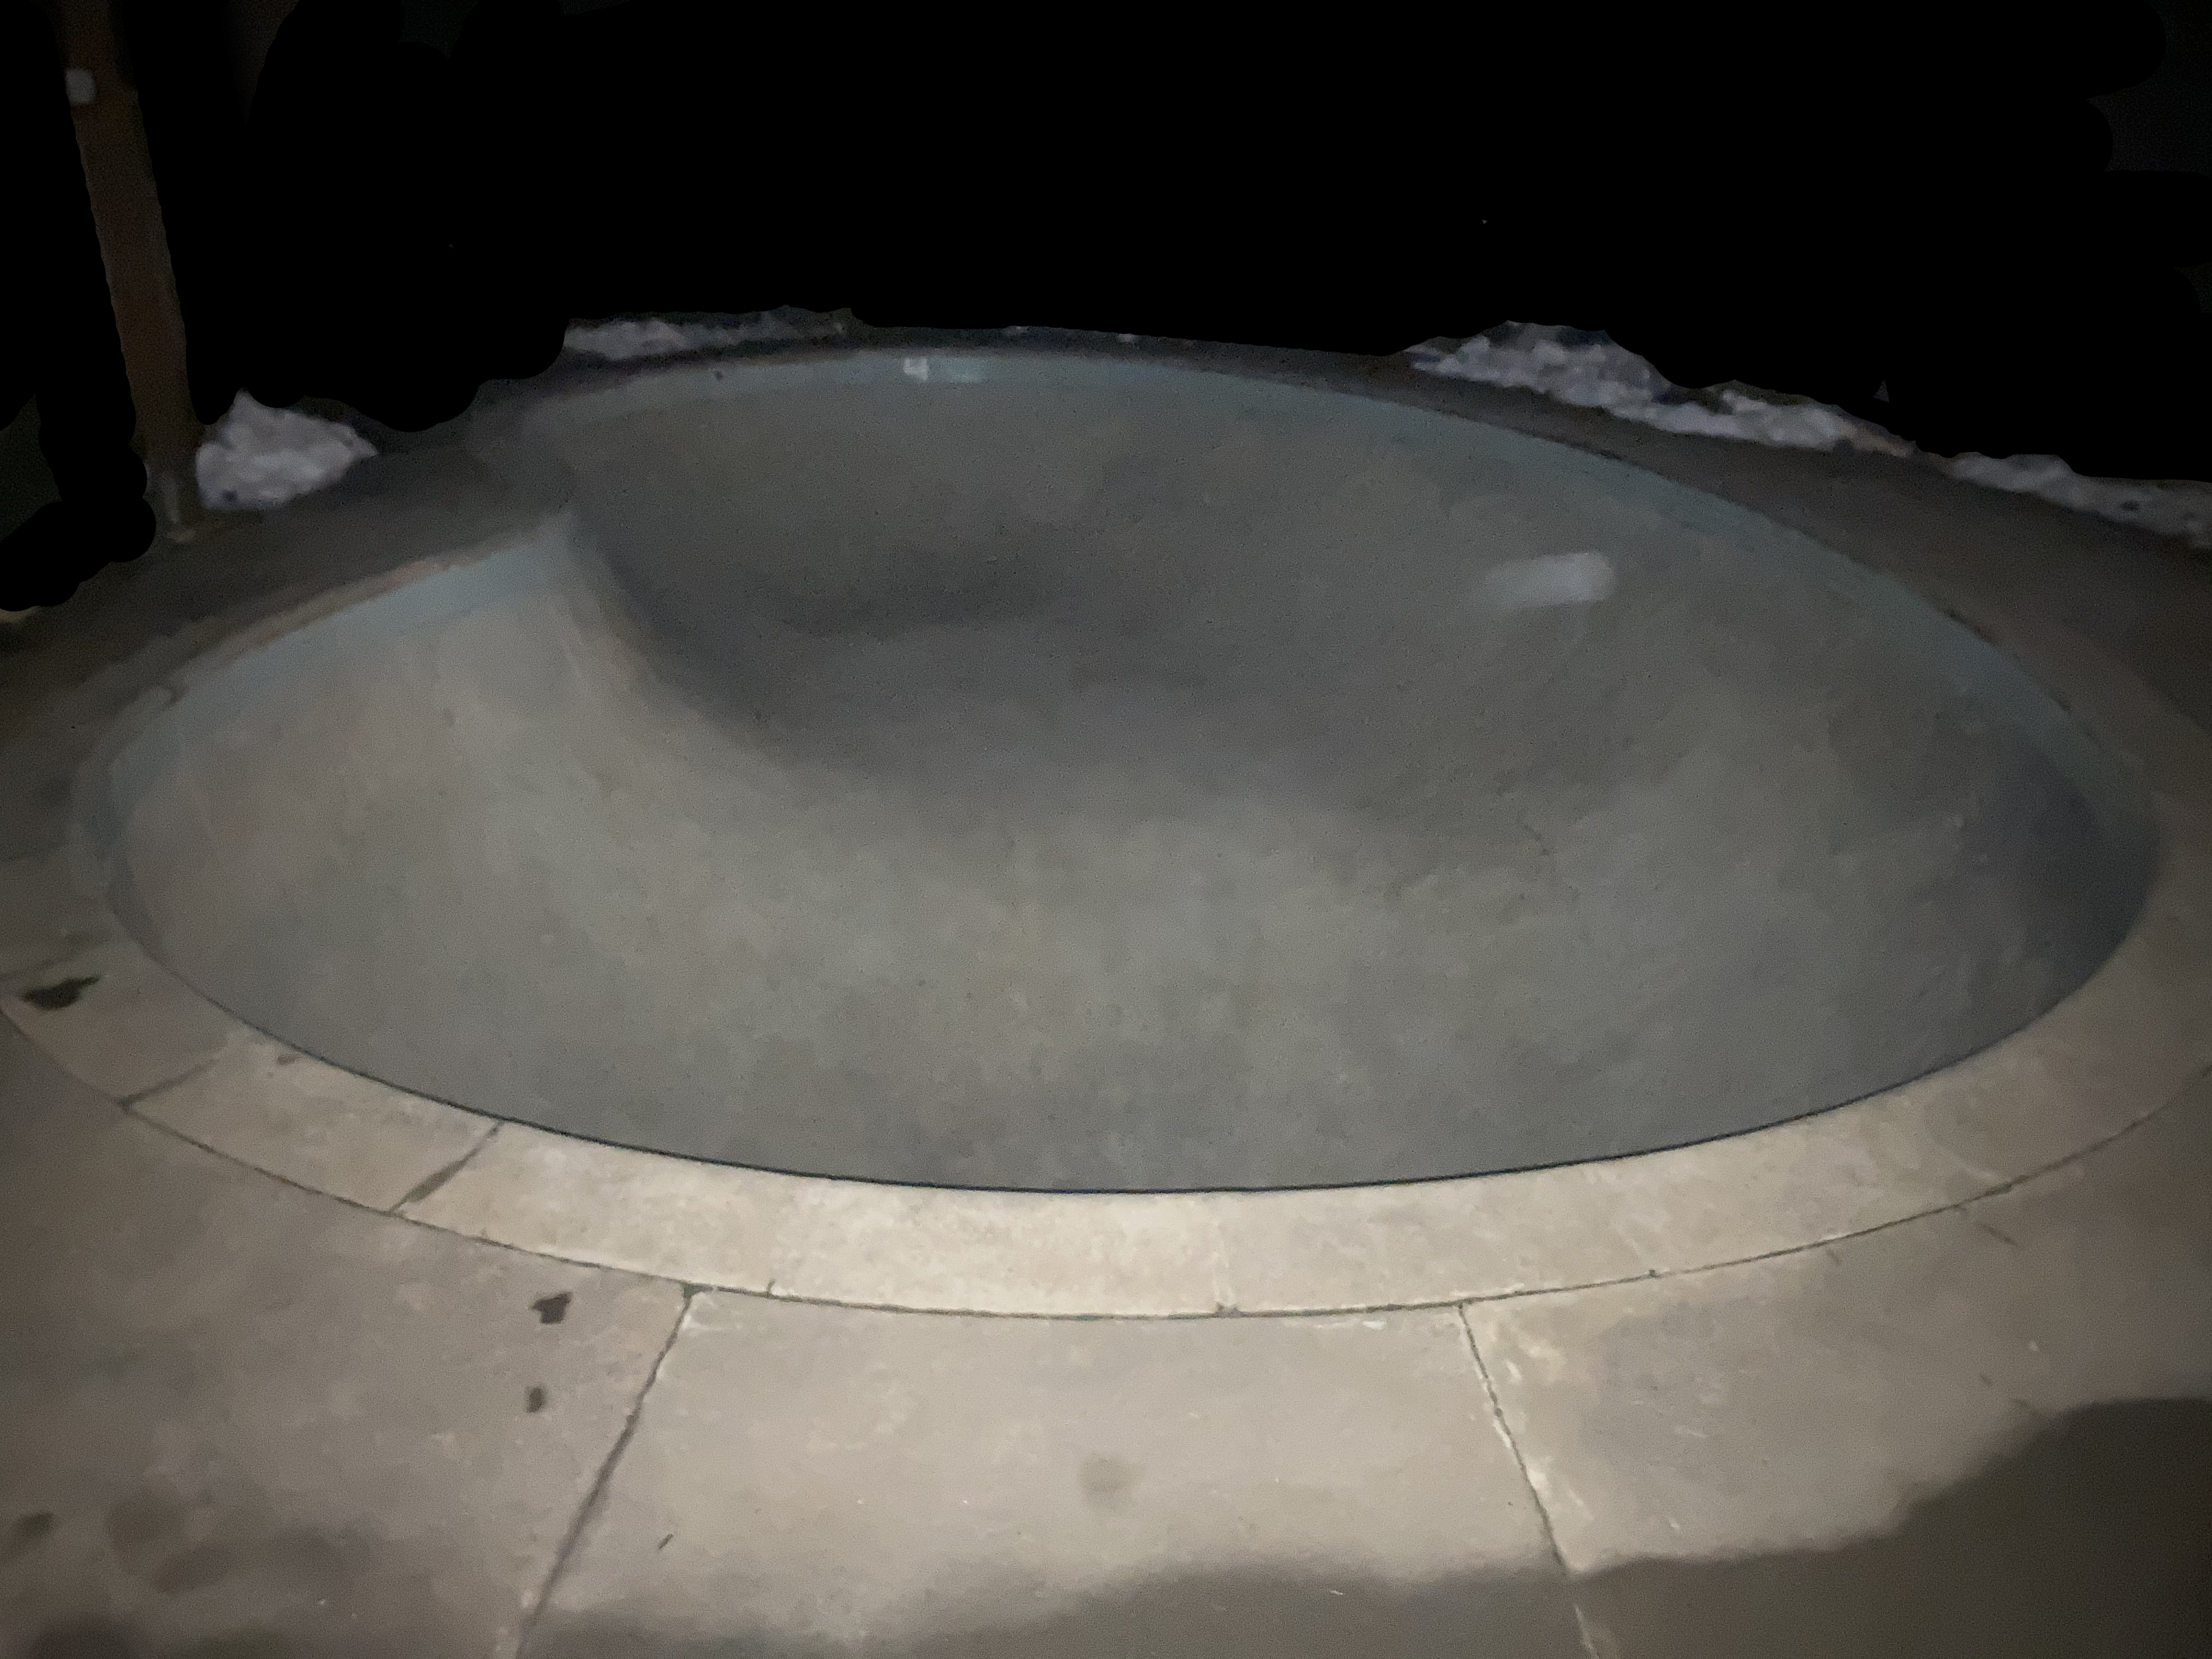 murky phonecam photo of my backyard skate bowl taken at night